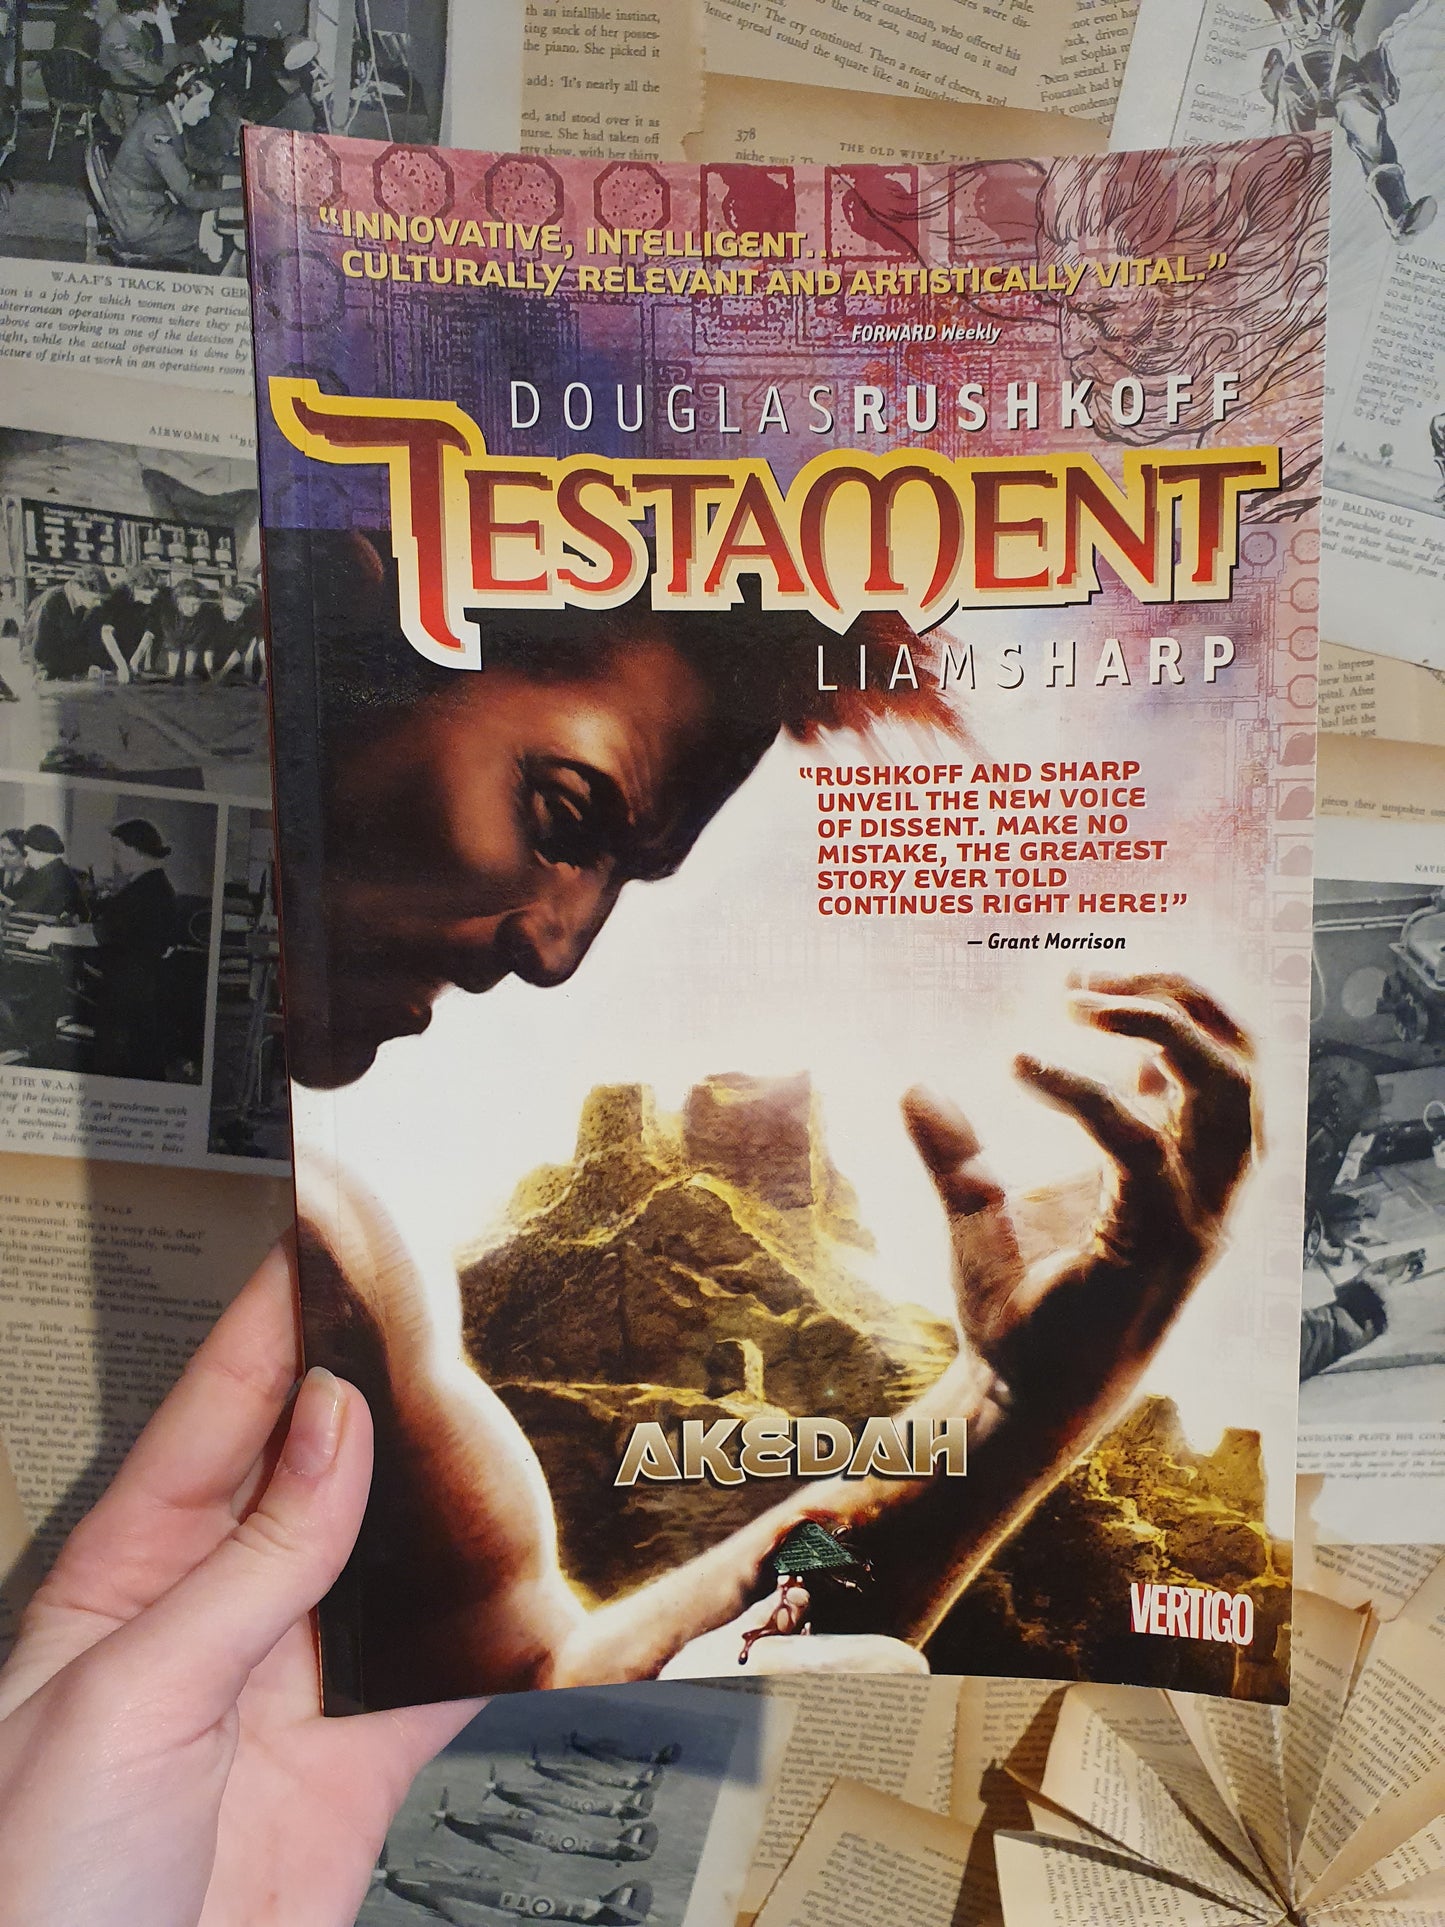 Testament: Akedah by Douglas Rushkoff (2006)